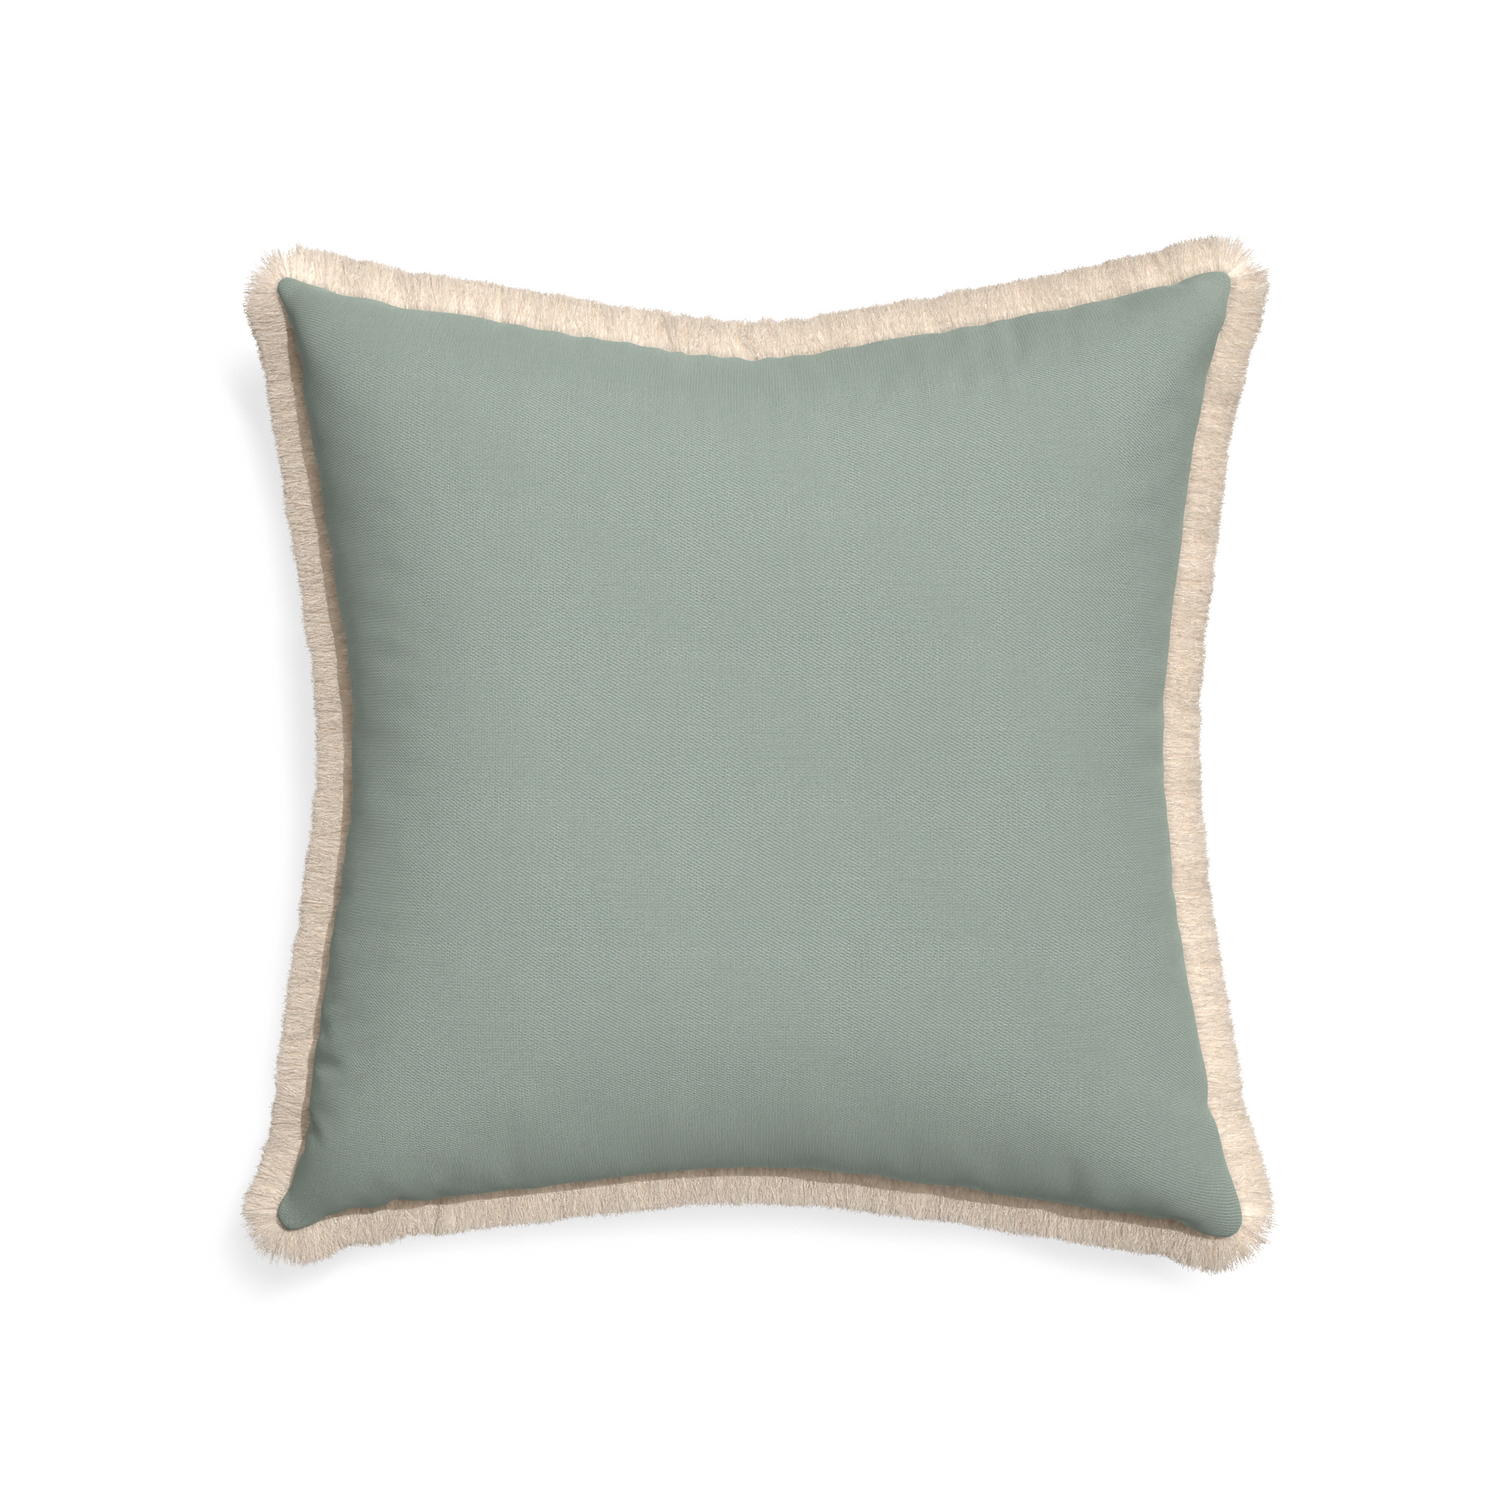 22-square sage custom pillow with cream fringe on white background